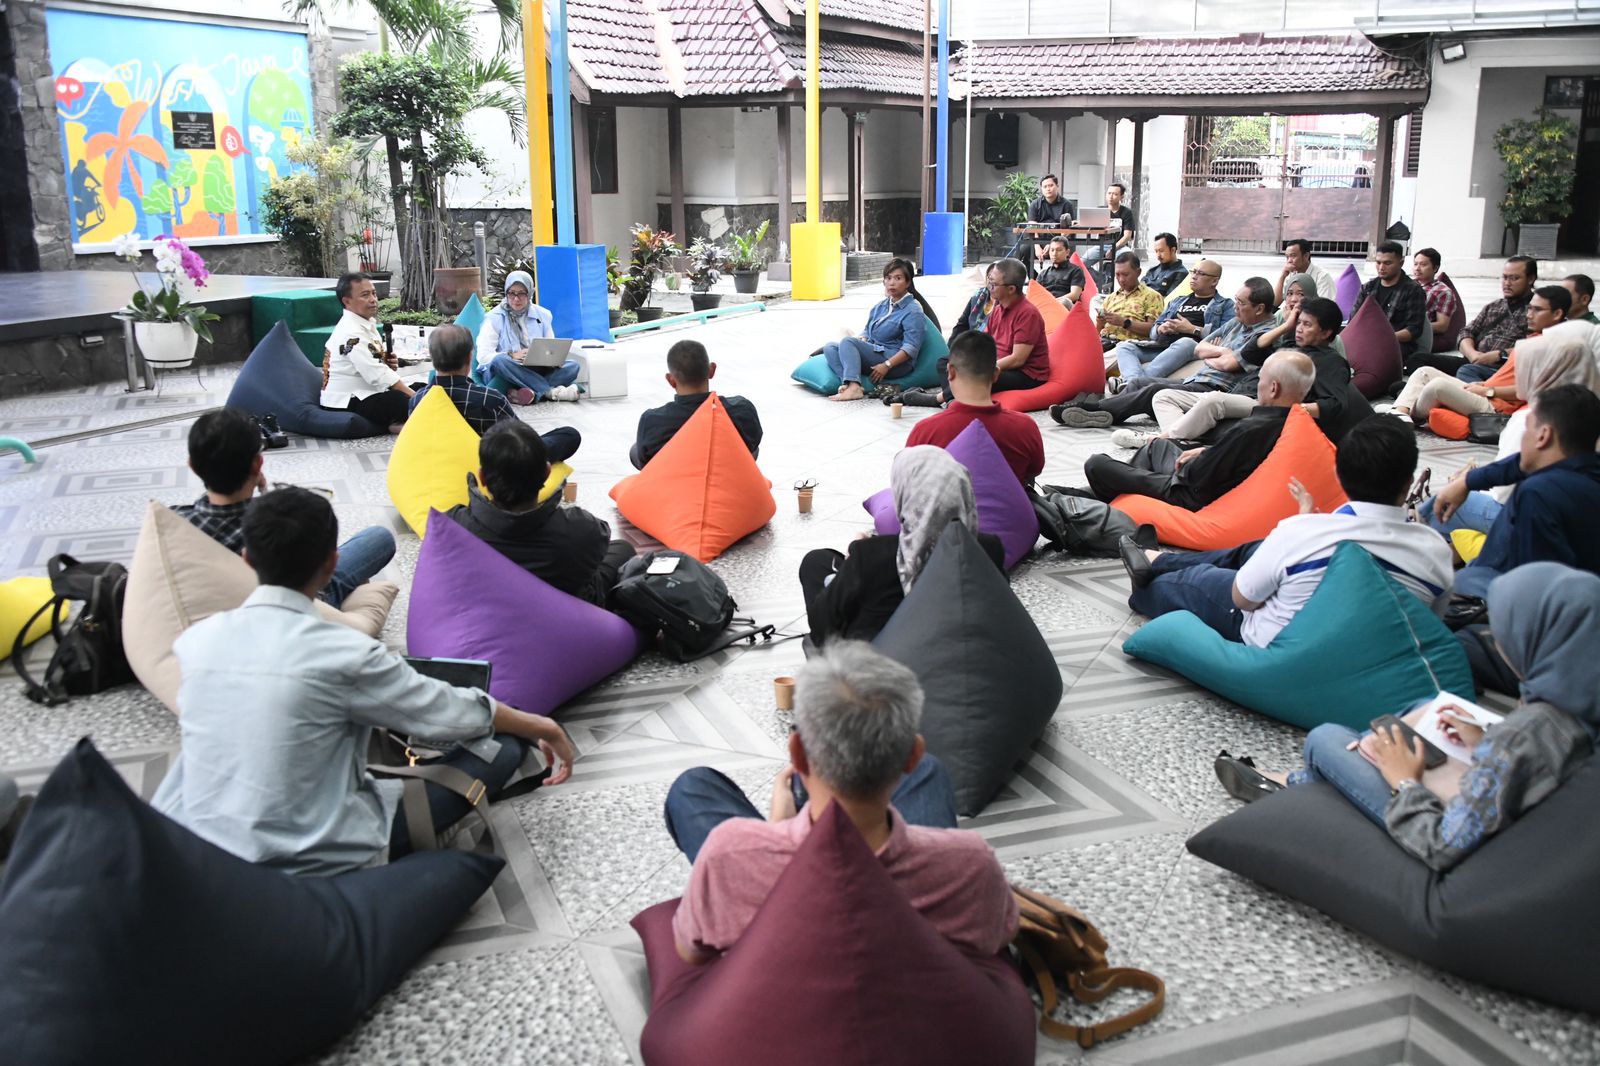 Sekda Herman Suryatman Optimistis Pariwisata Jawa Barat Dapat Tumbuh Progresif